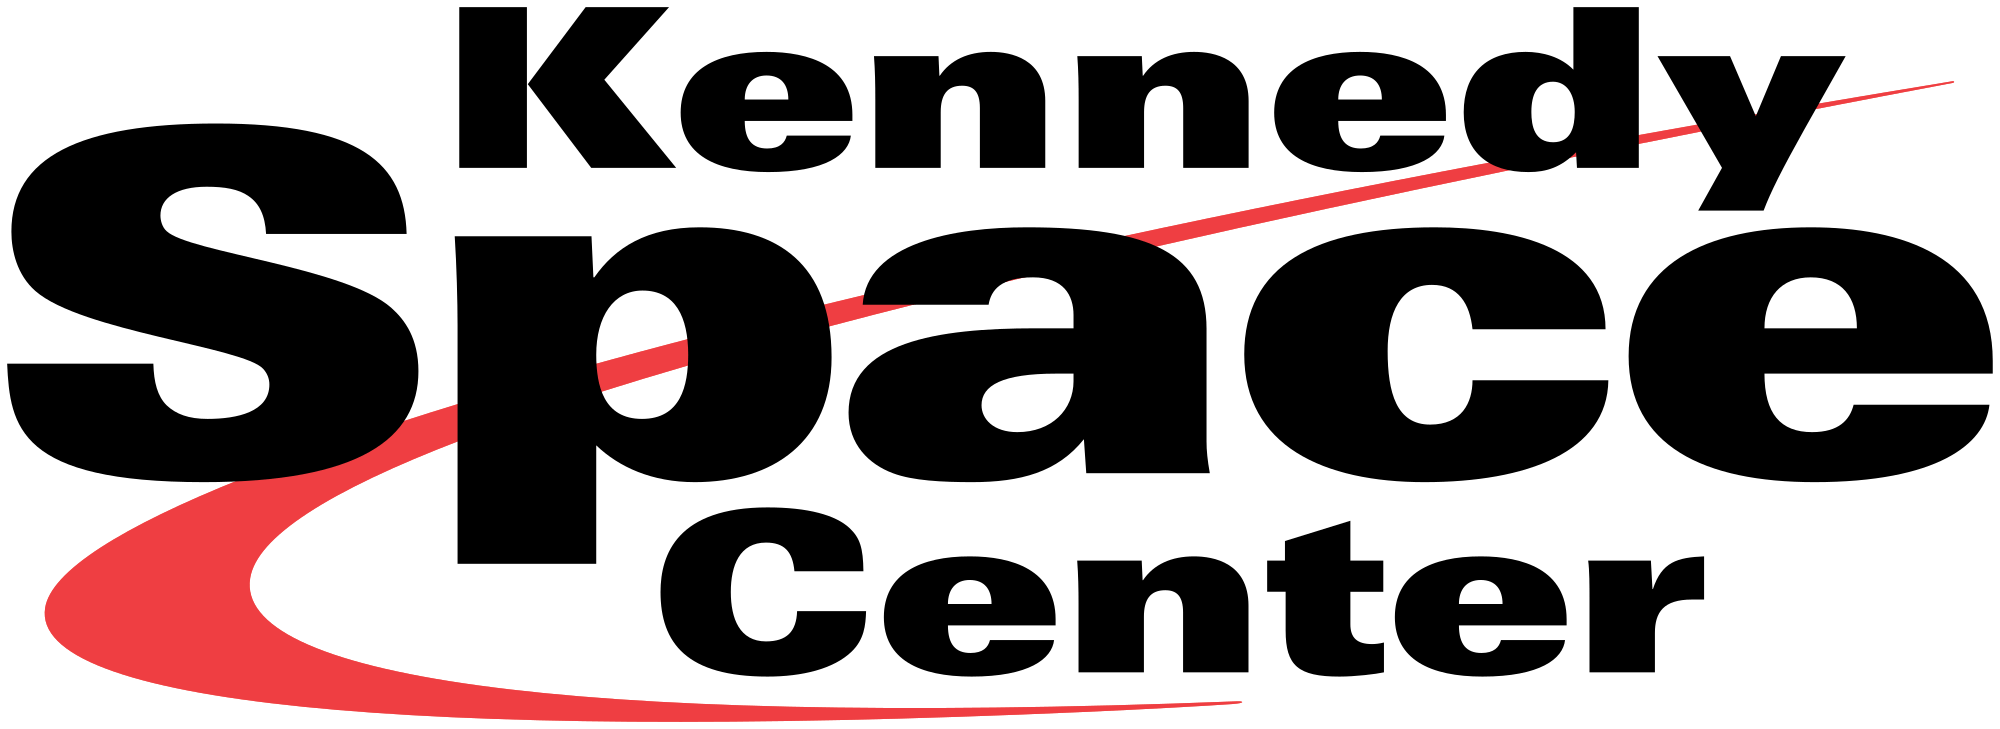 Kennedy Logo - File:Kennedy-Space-Center-Logo.svg - Wikimedia Commons